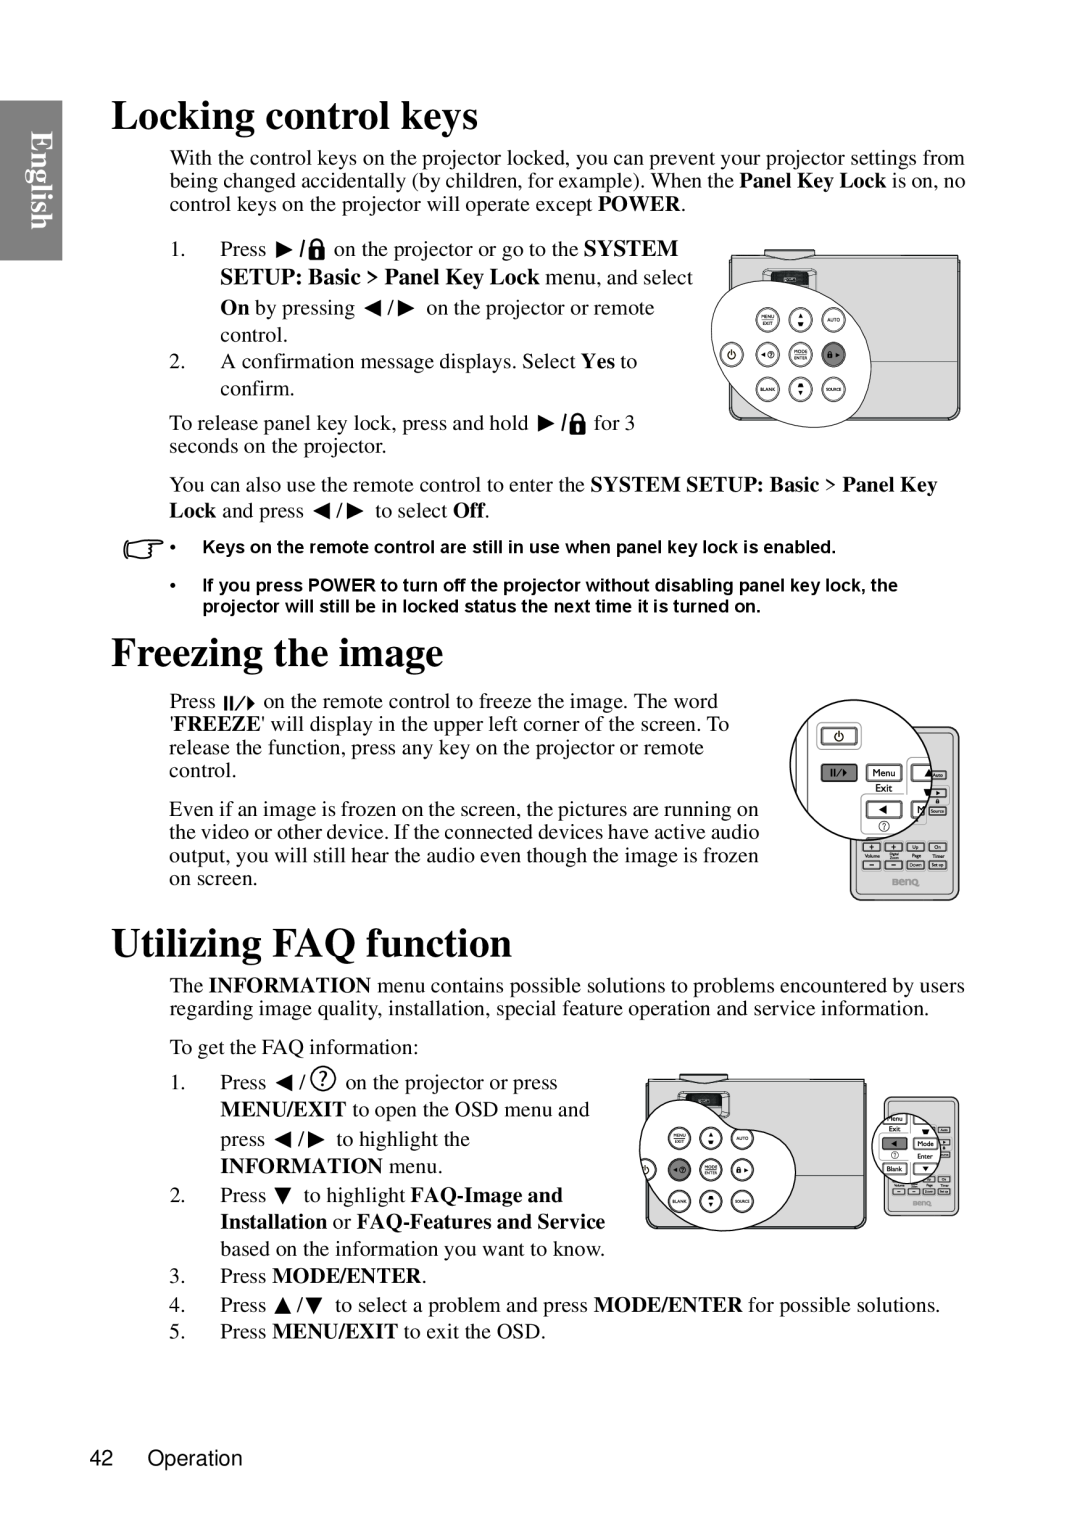 BenQ MP670 user manual Locking control keys, Freezing the image, Utilizing FAQ function, English 